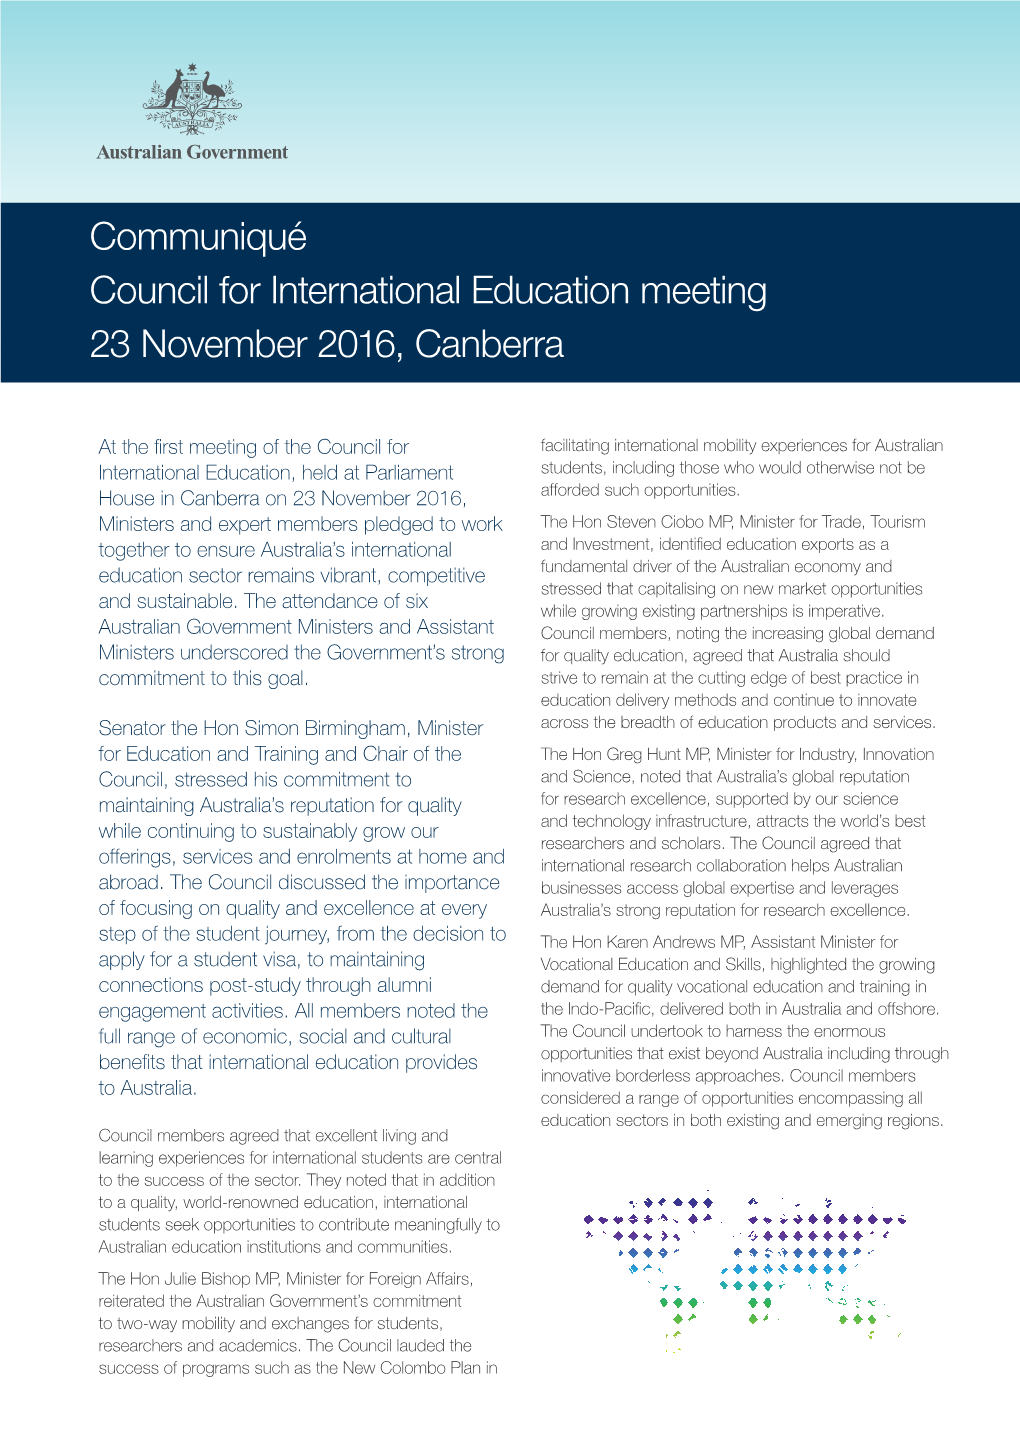 Communiqué Council for International Education Meeting 23 November 2016, Canberra